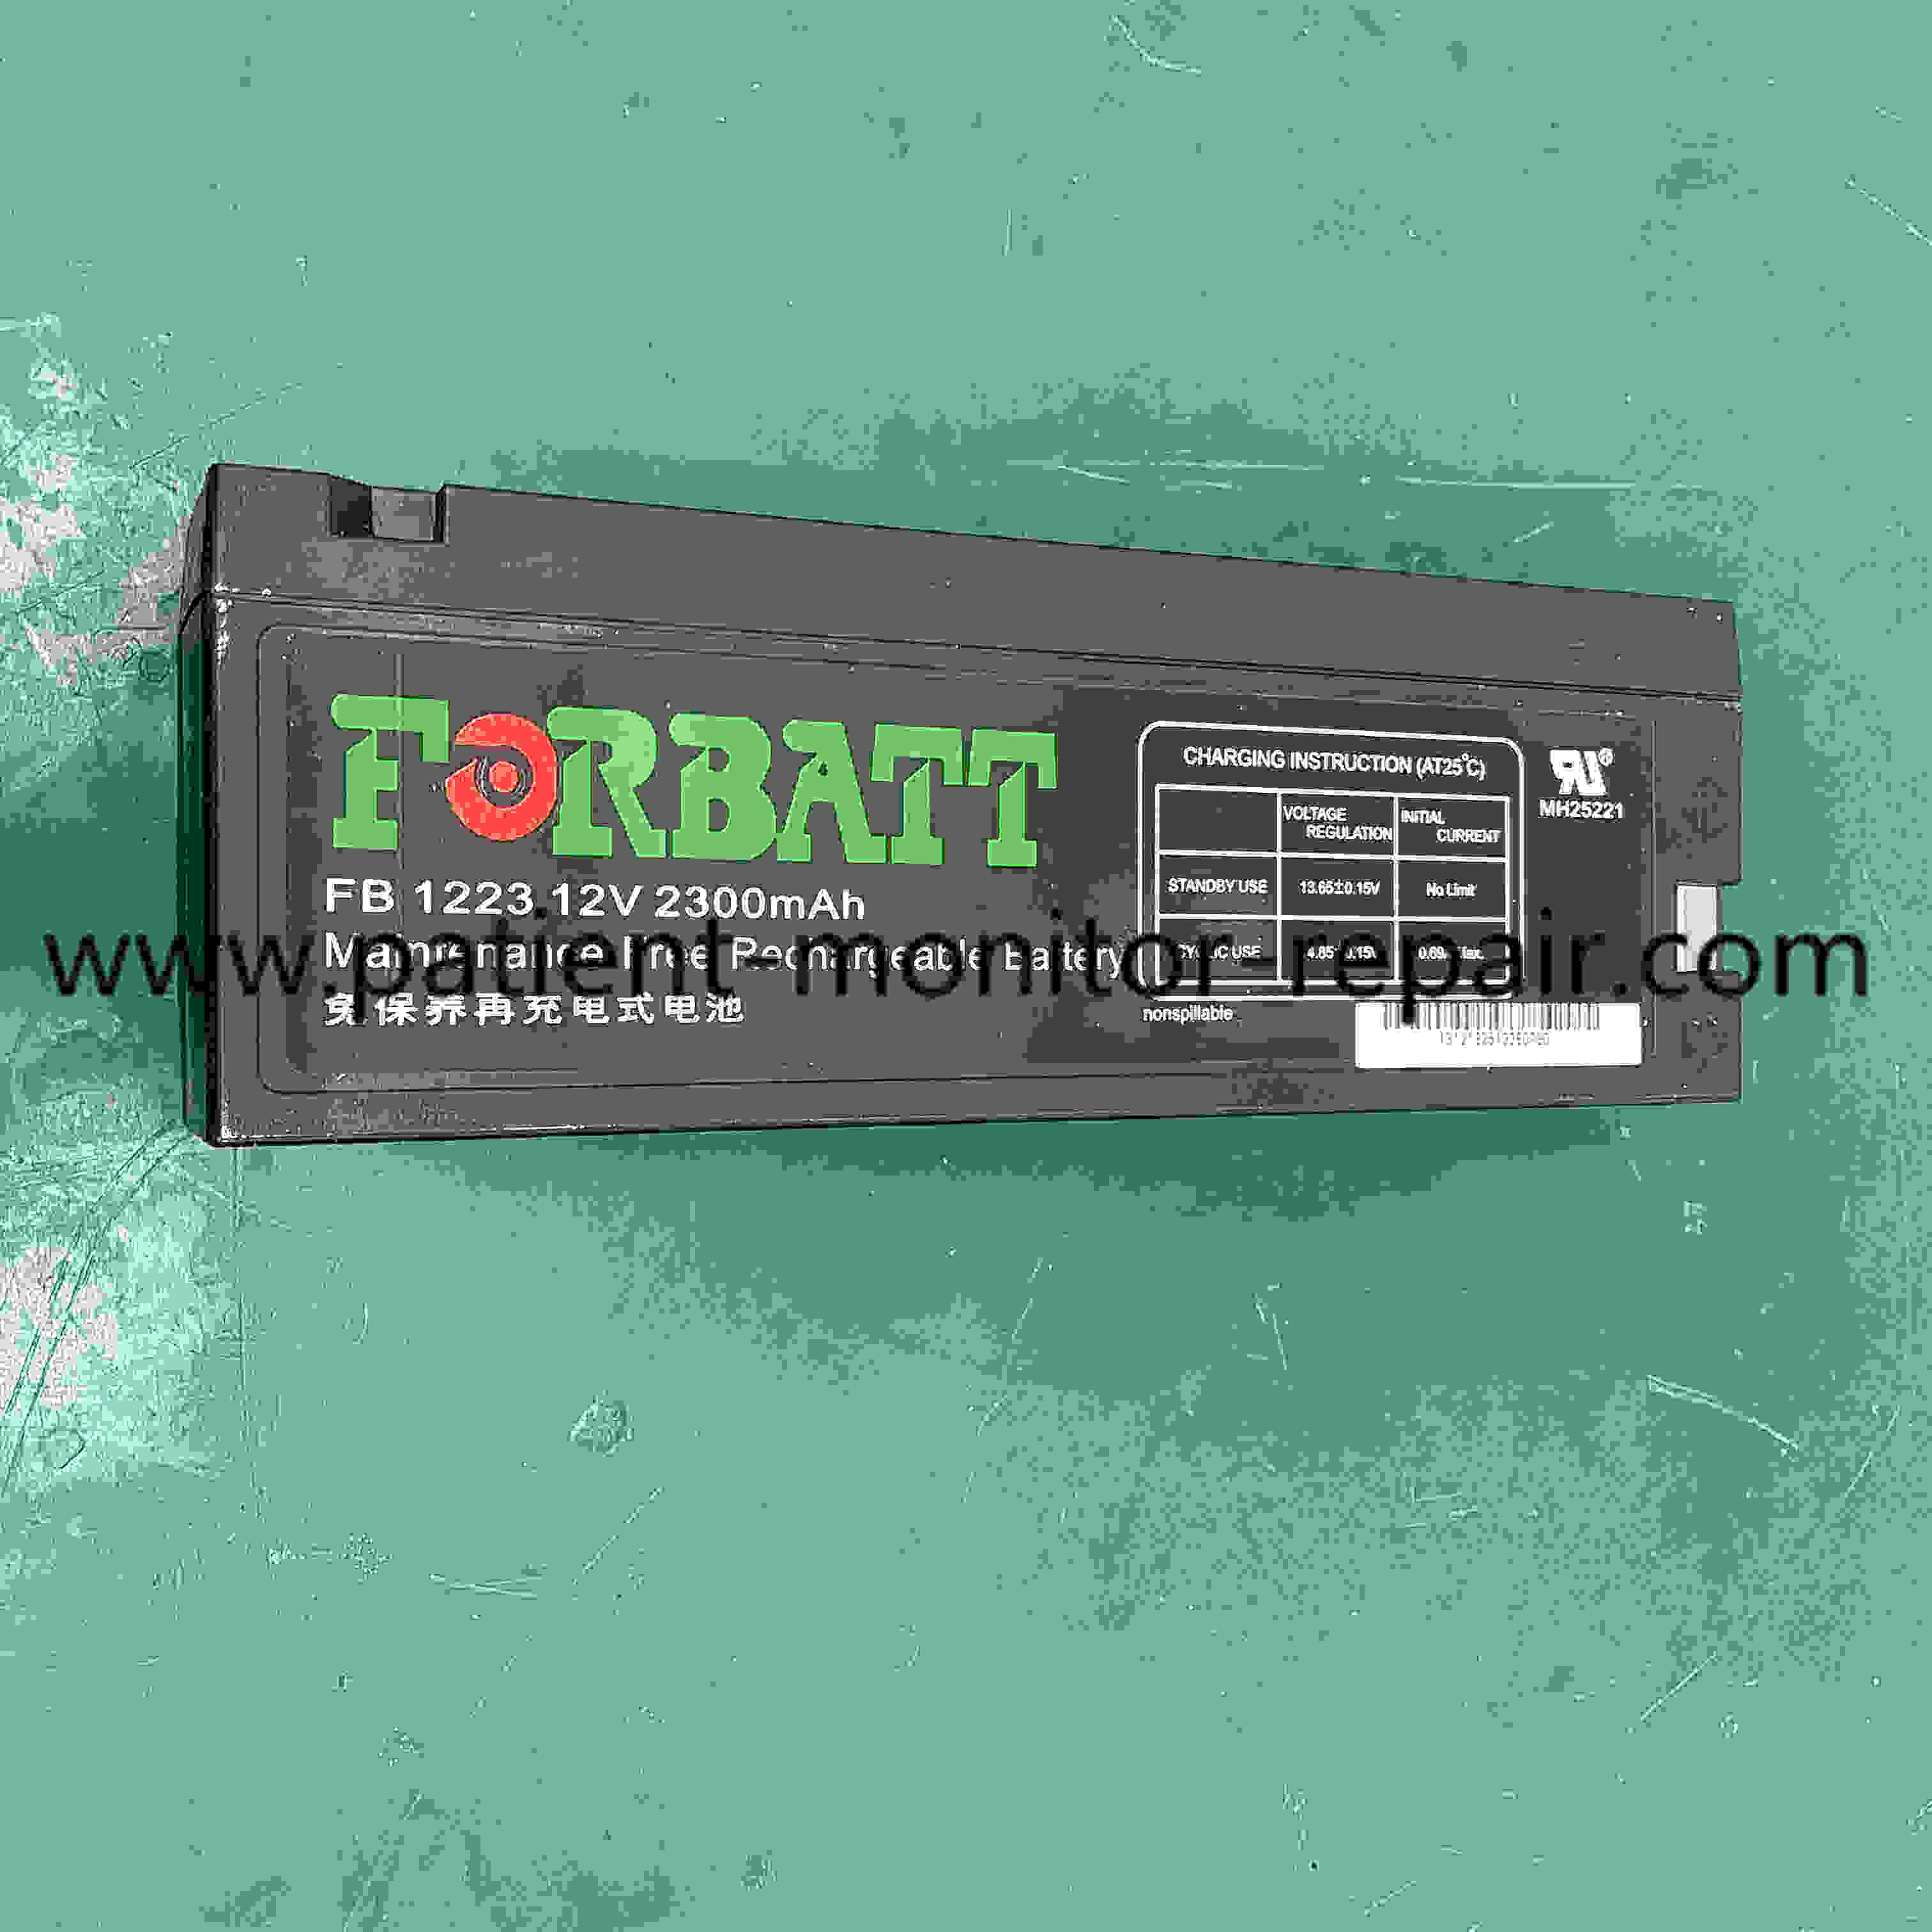 Forbatt Maintenance Free Rechargeable Battery FB 1223 12V 2.3mAh for Patient Monitors